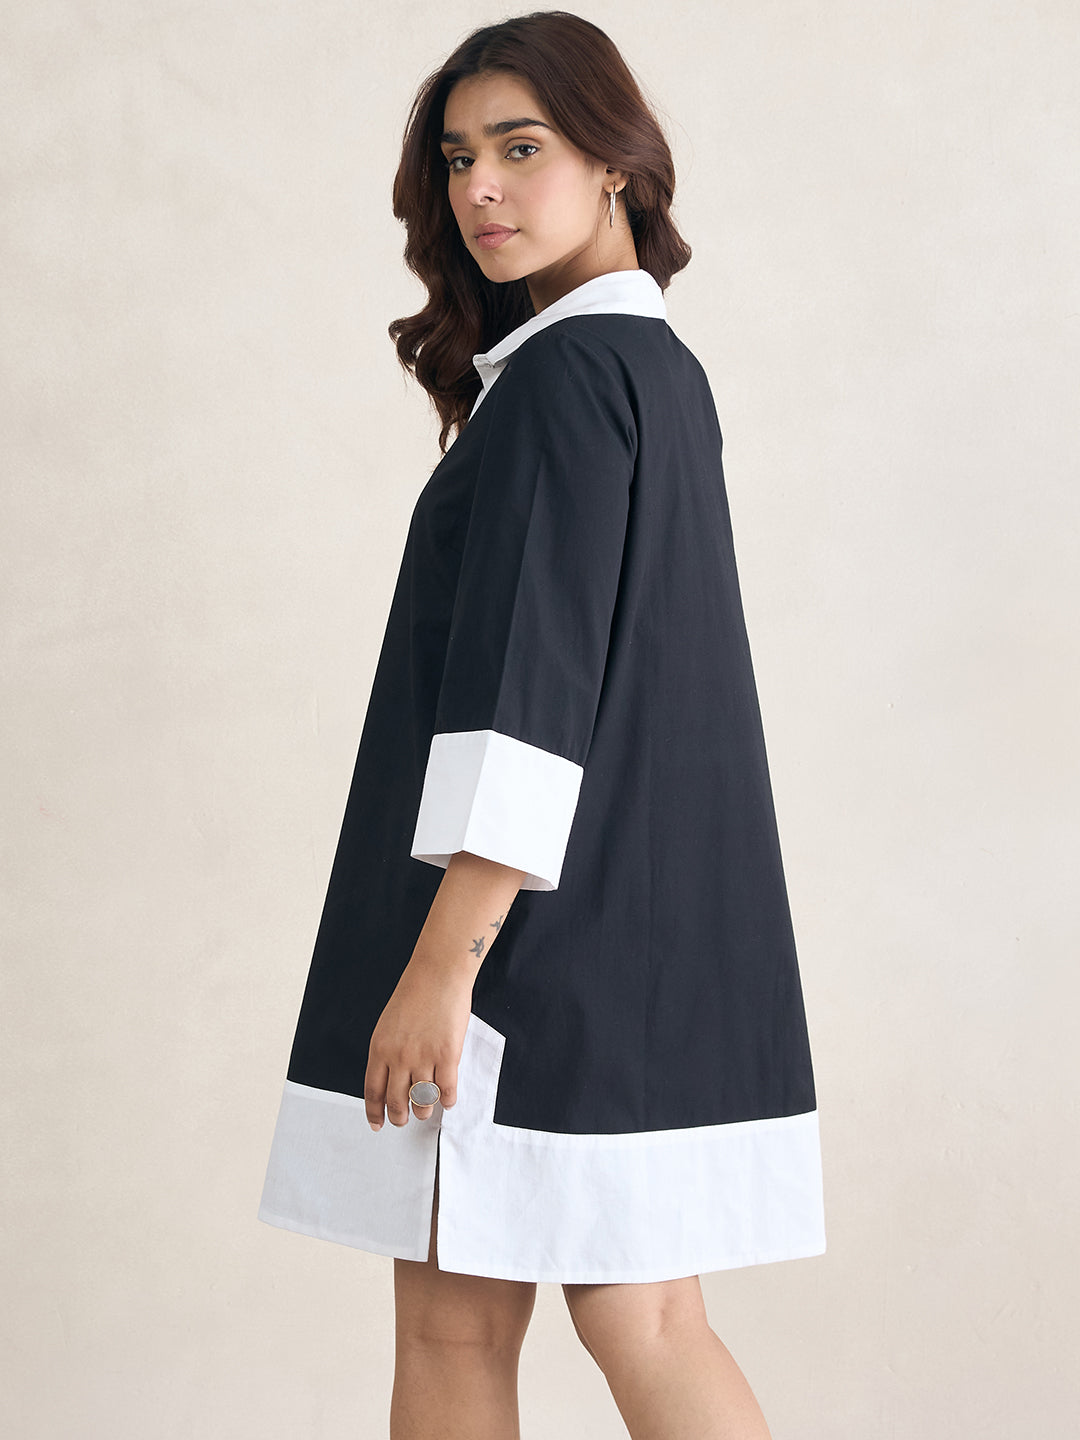 Black Colorblock Knee Length Shirt Dress